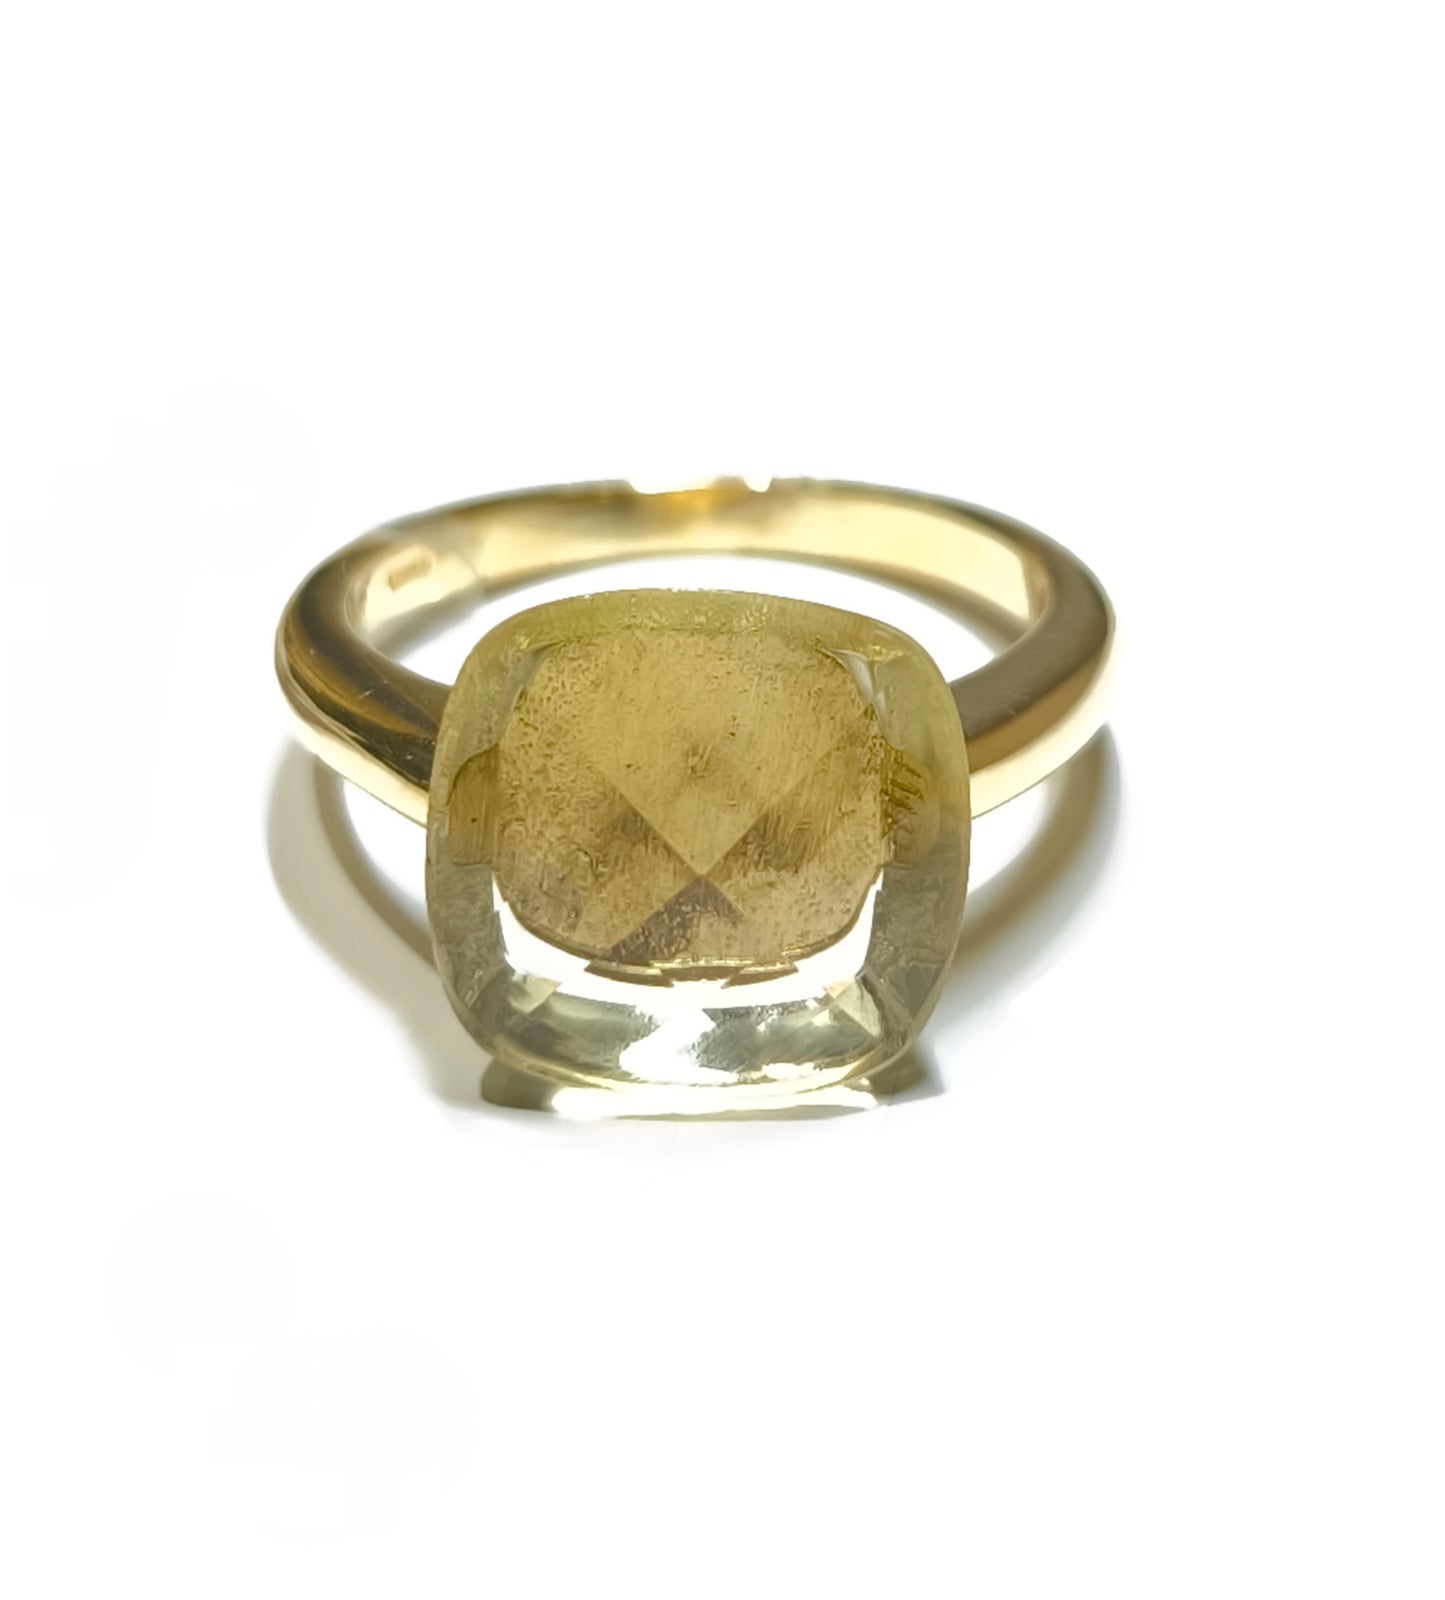 Gold ring with lemon quartz